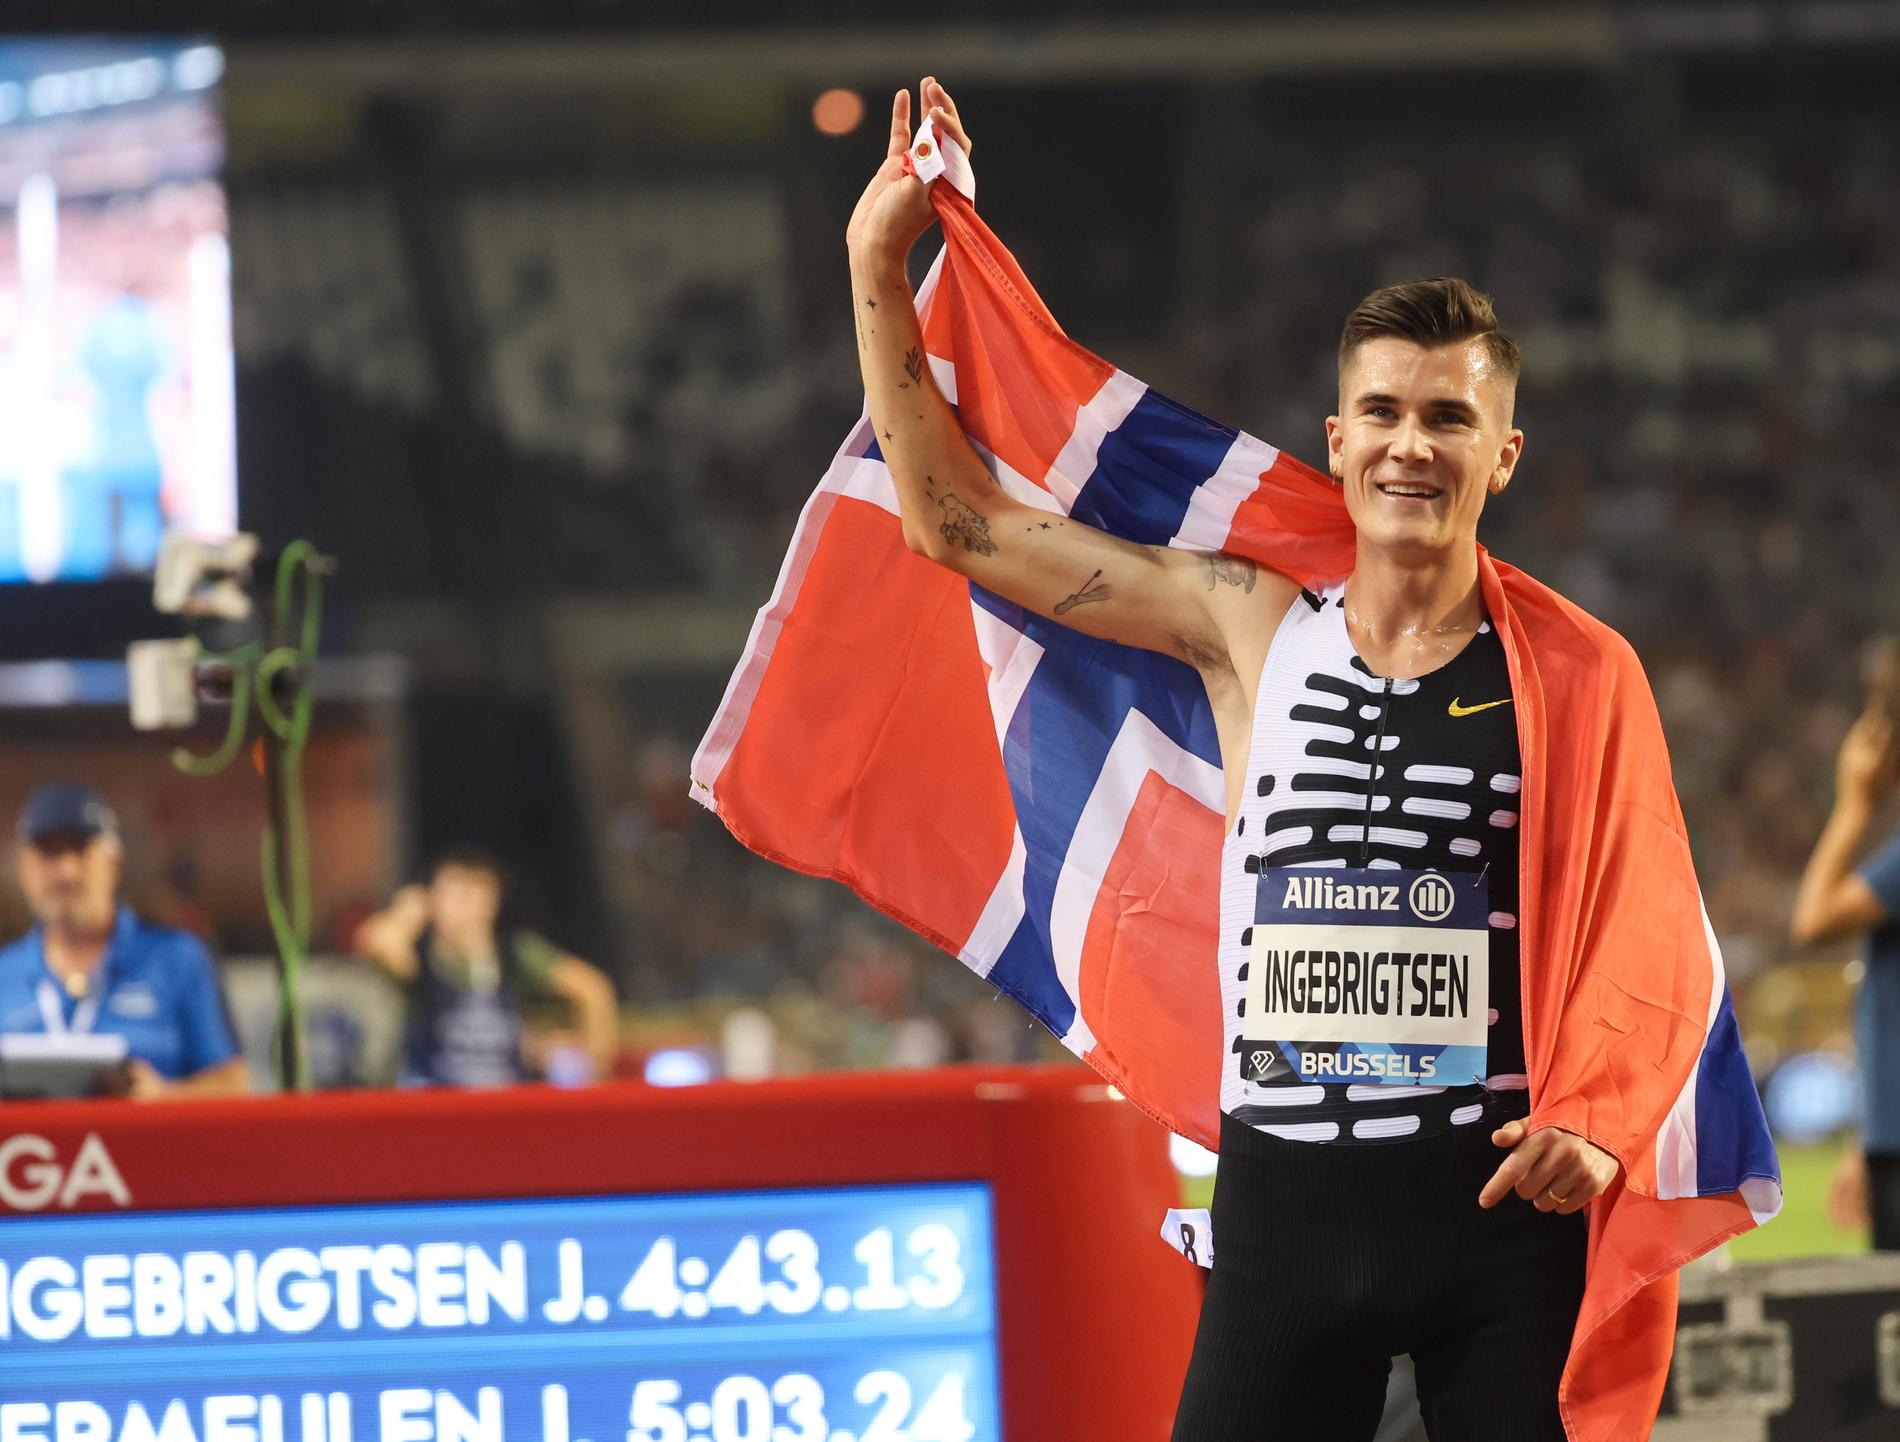 Record del mondo: Jakob Ingebrigtsen primeggia nei 2000 metri a Bruxelles.